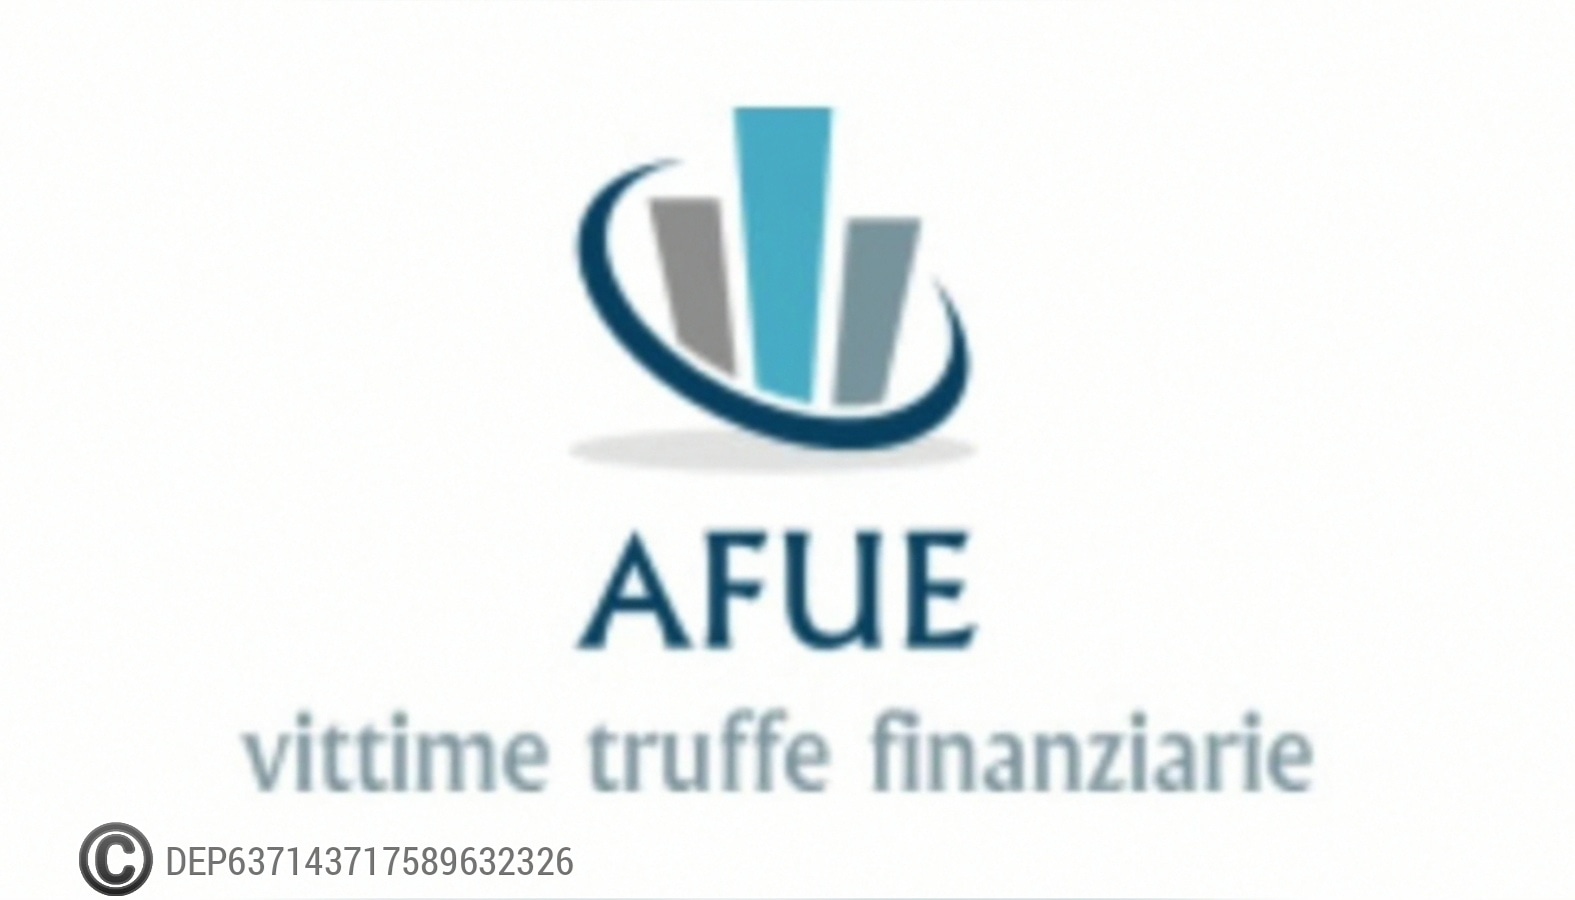 Le azioni collettive in corso, proposte da AFUE associazione vittime di truffe finanziarie internazionali